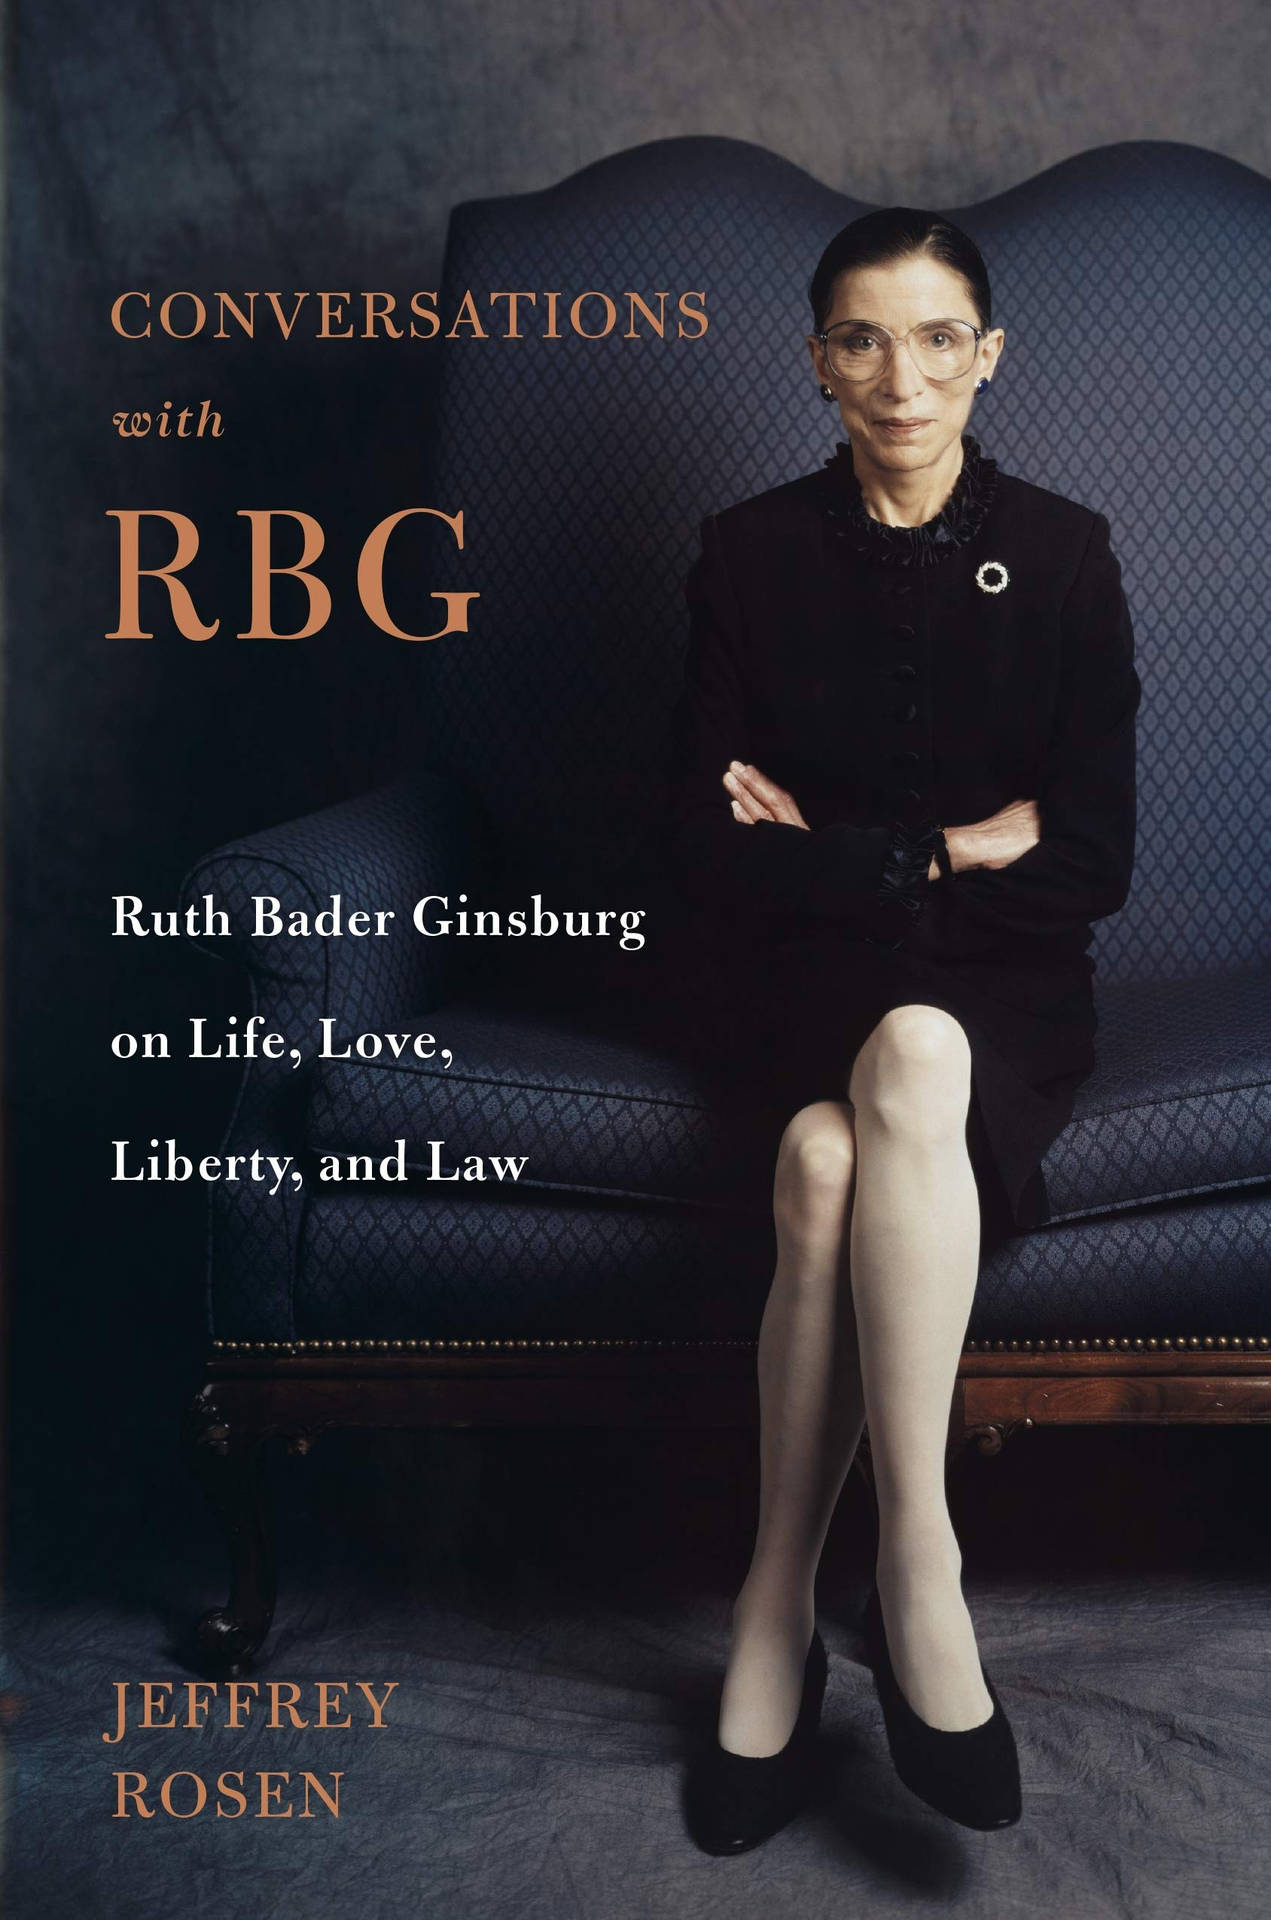 Ruth Bader Ginsburg Magazine Cover Photograph Wallpaper